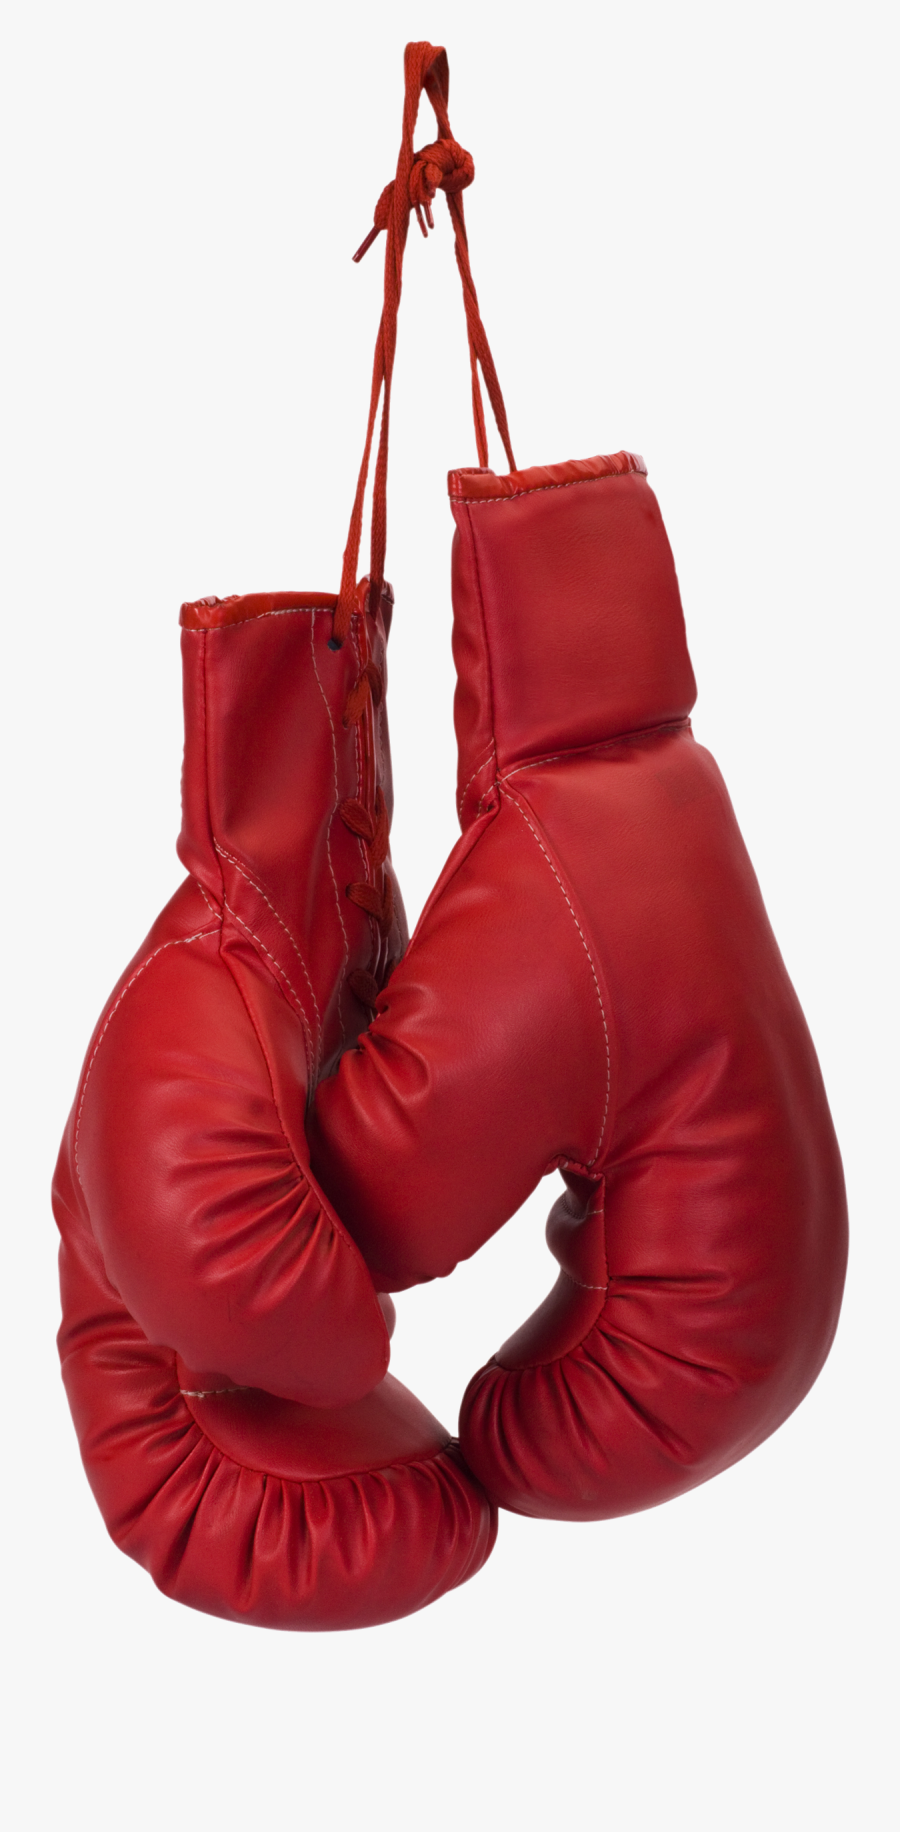 Boxing Gloves Png Transparent Images - Boxing Gloves Hanging Png, Transparent Clipart